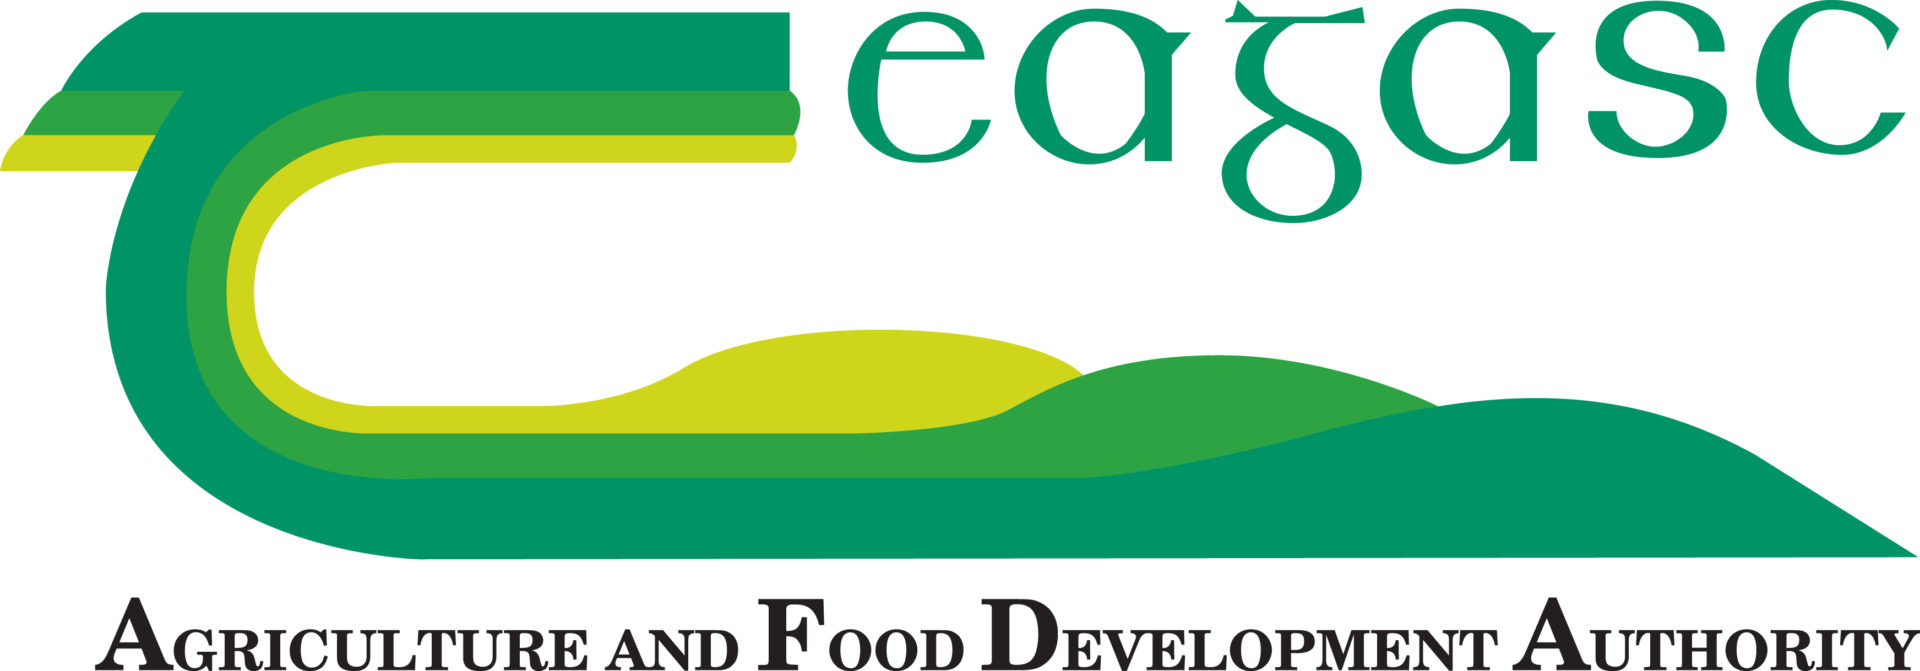 TEAGASC AGRICULTURE AND FOOD DEVELOPMENT AUTHORITY (Teagasc)